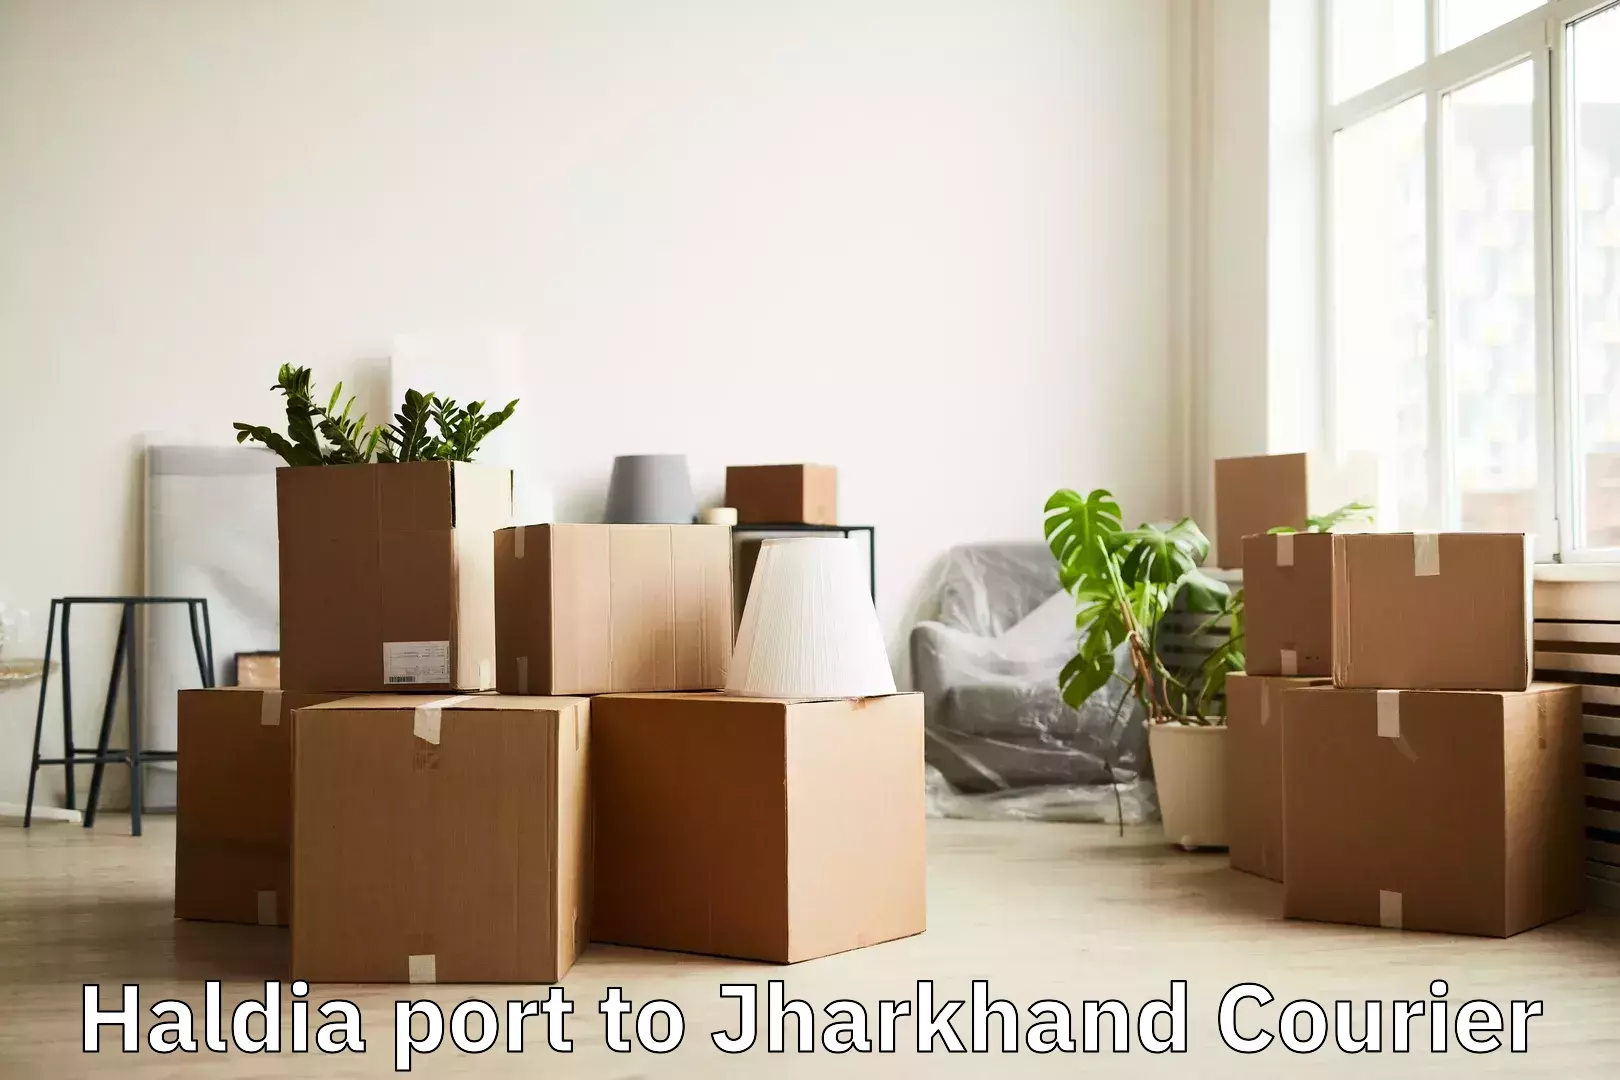 Luggage delivery solutions Haldia port to Seraikella